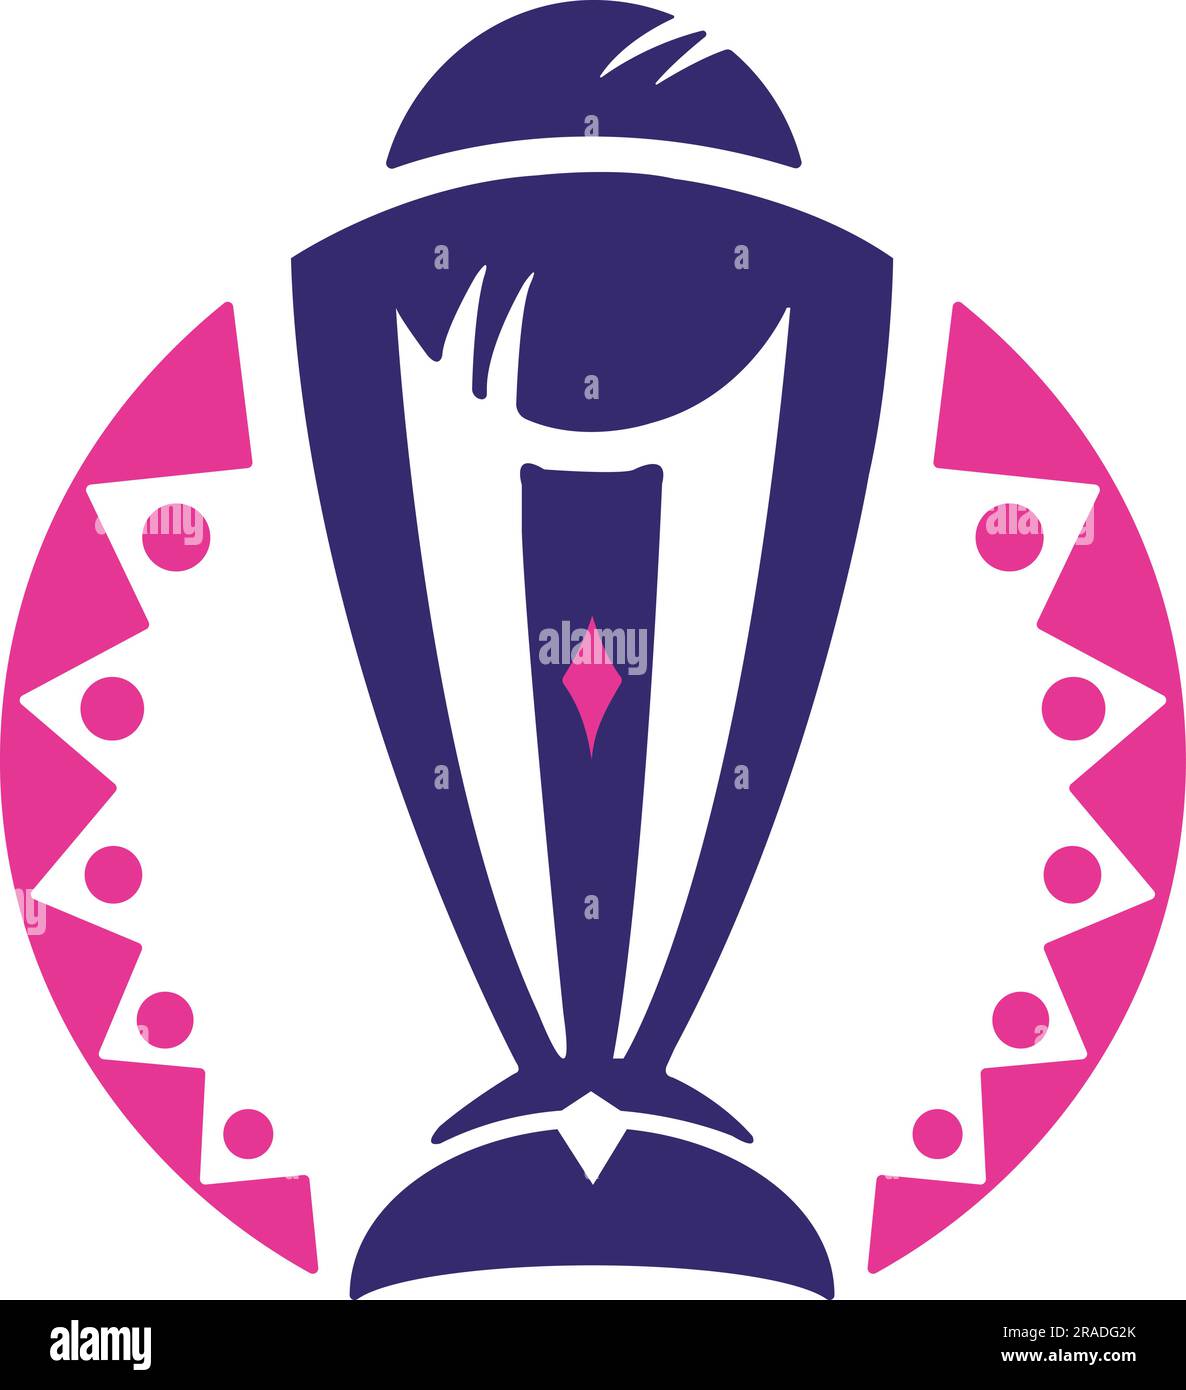 ICC ( international cricket council ) trophy logo for ODI cricket world ...